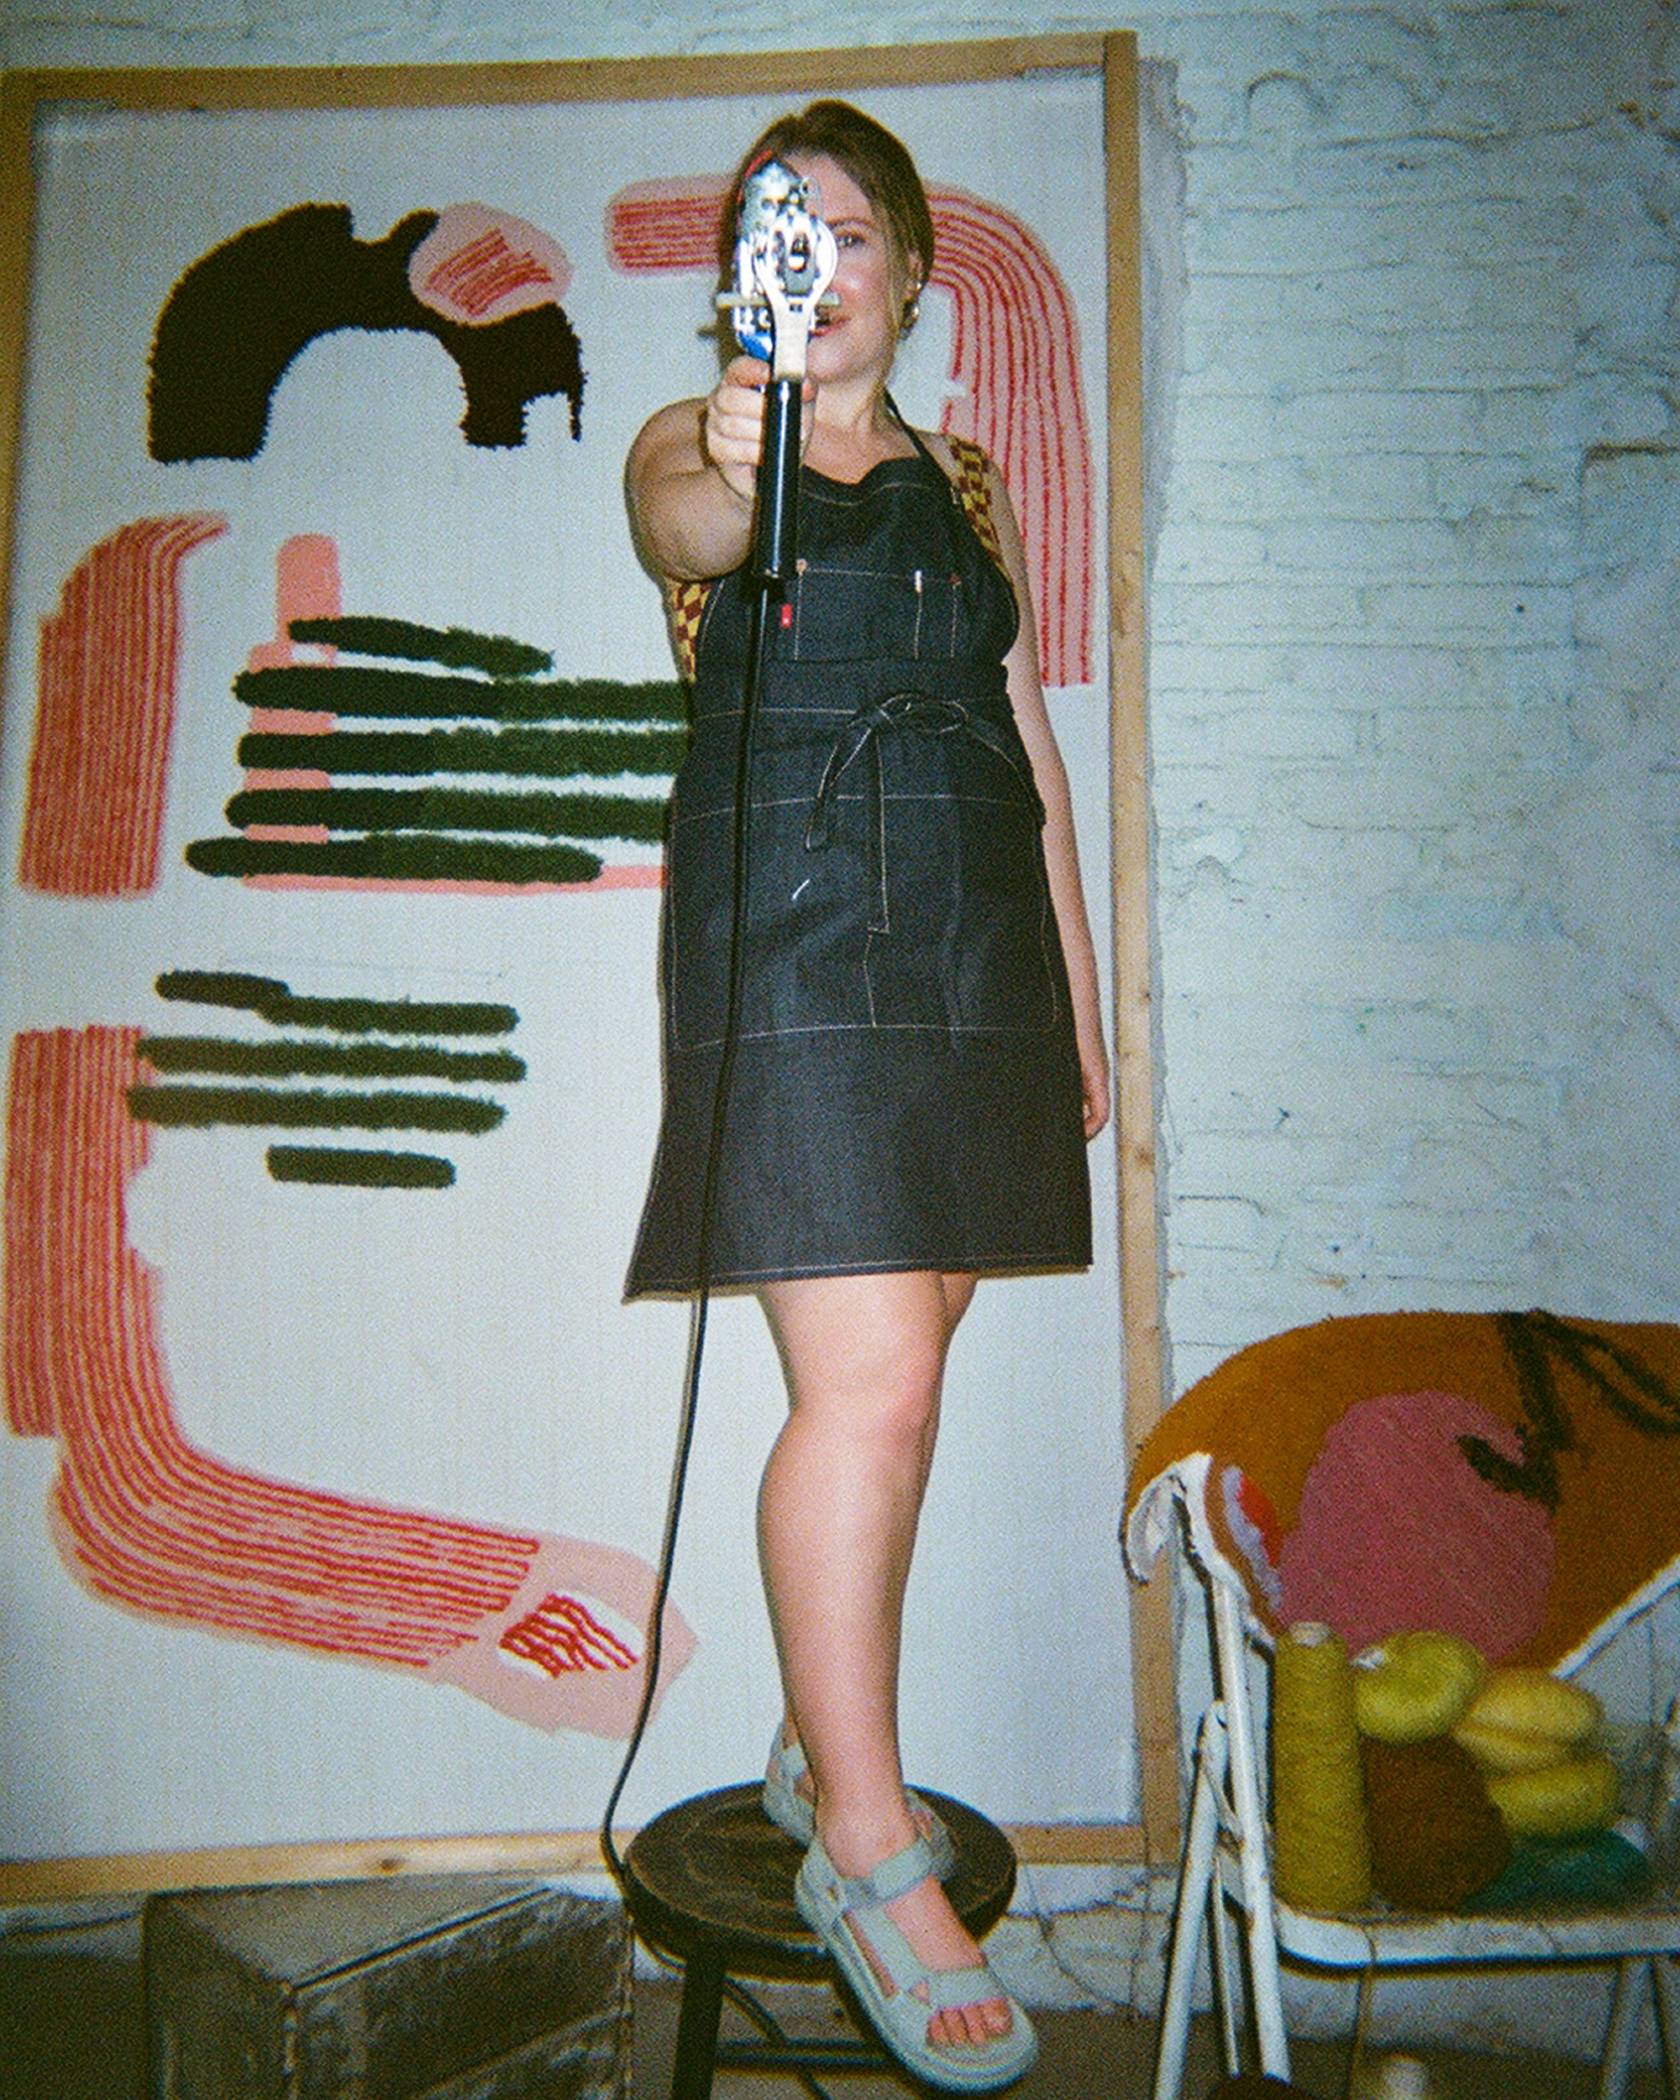 Caroline Kaufman wearing a levis denim overalls in front of her artwork